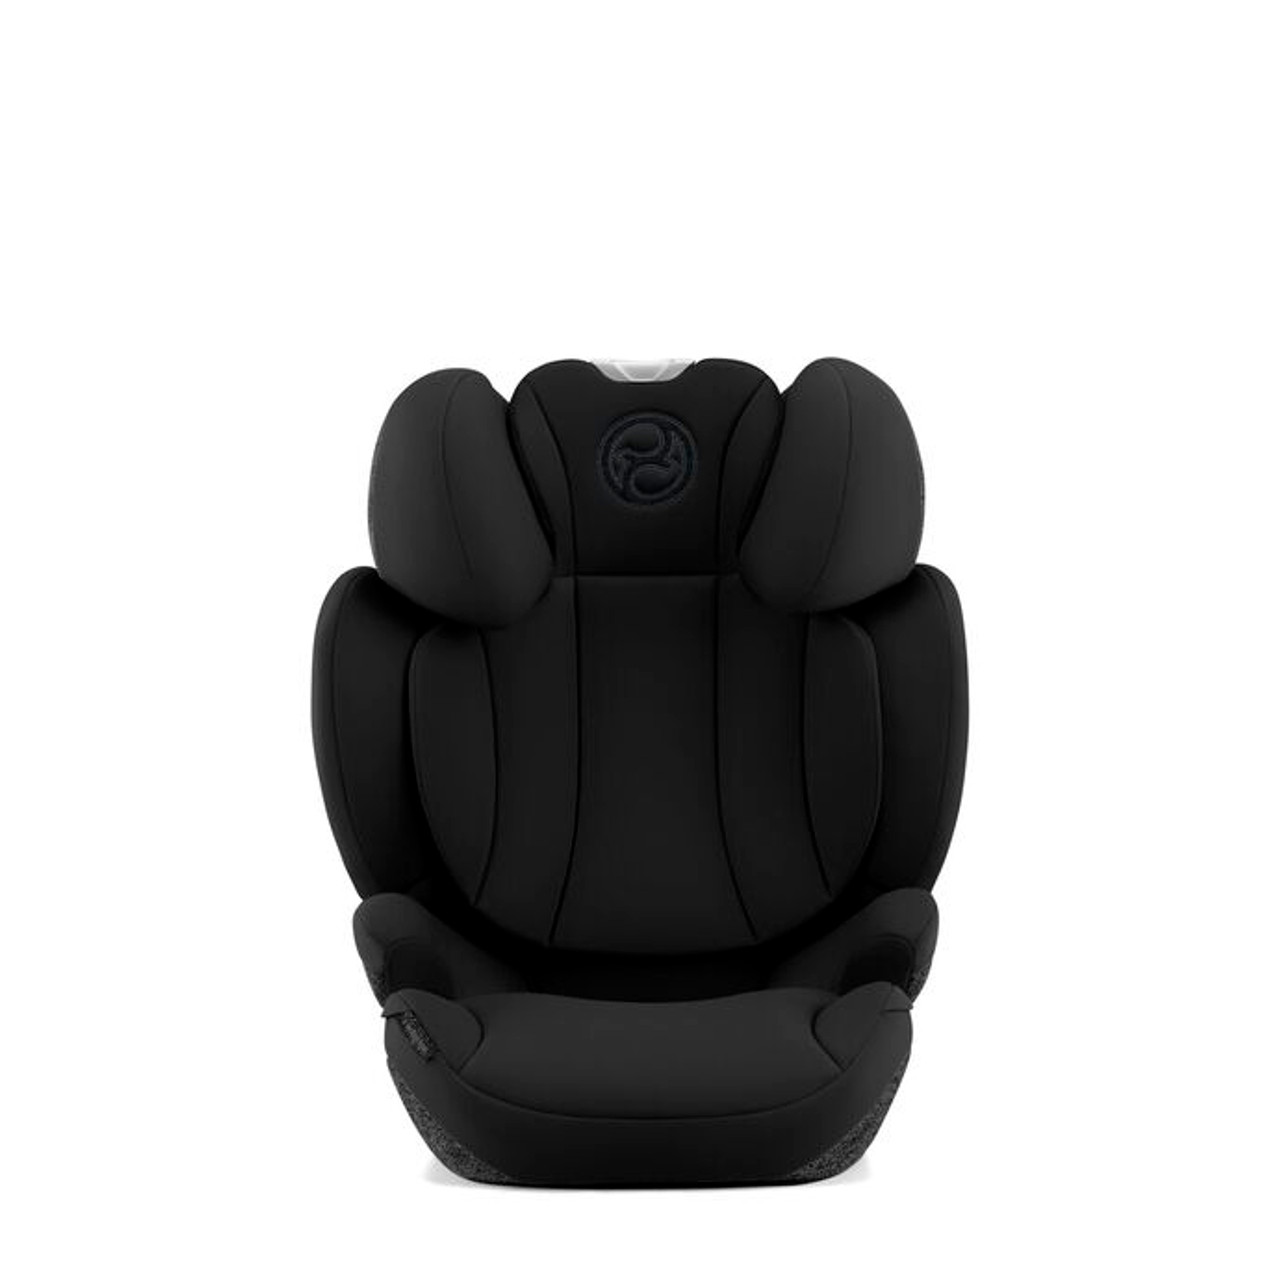 Cybex Platinum Solution Z-fix Booster Car Seat